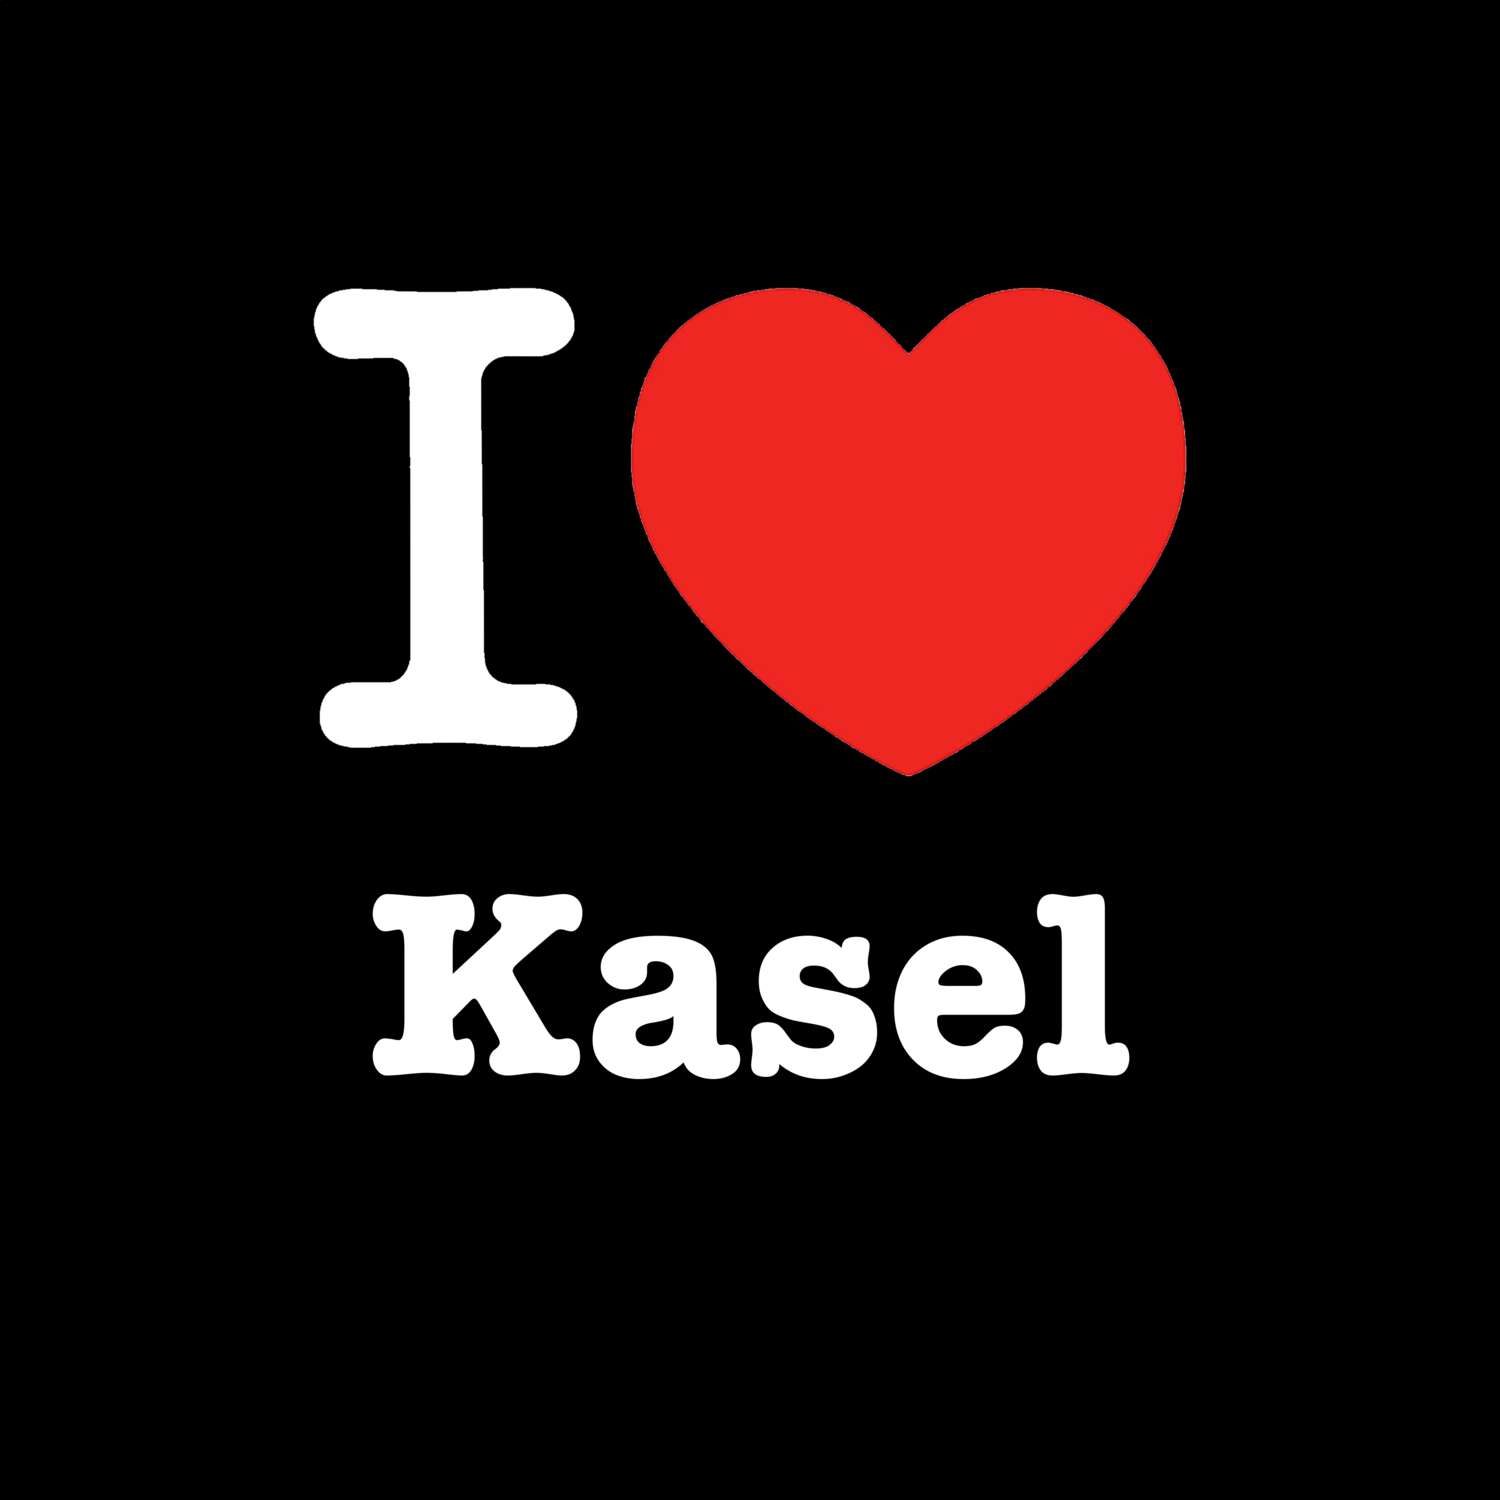 Kasel T-Shirt »I love«